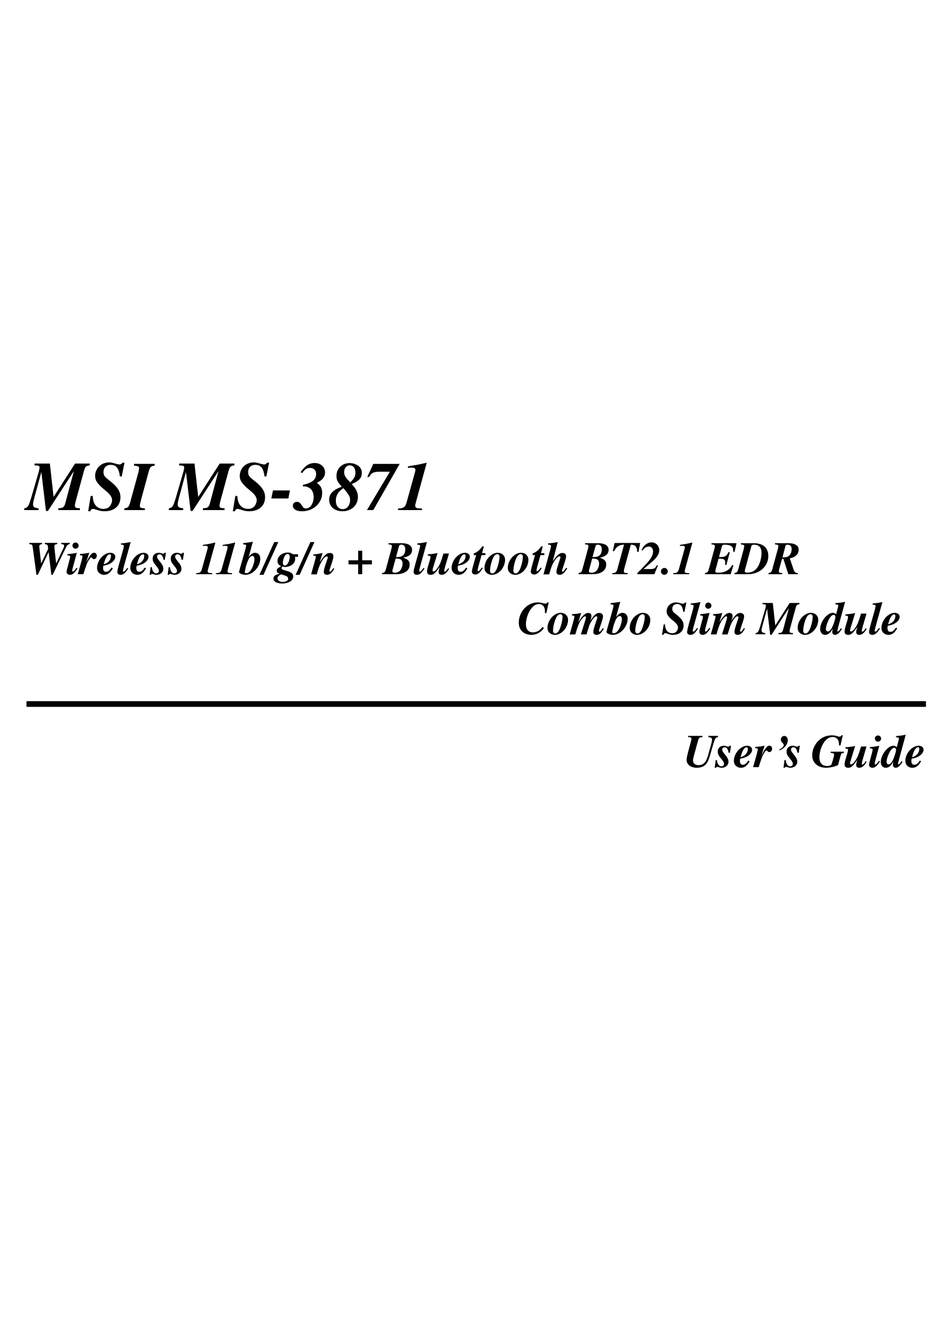 msi ms-3871 wlan 802.11b/g/n driver